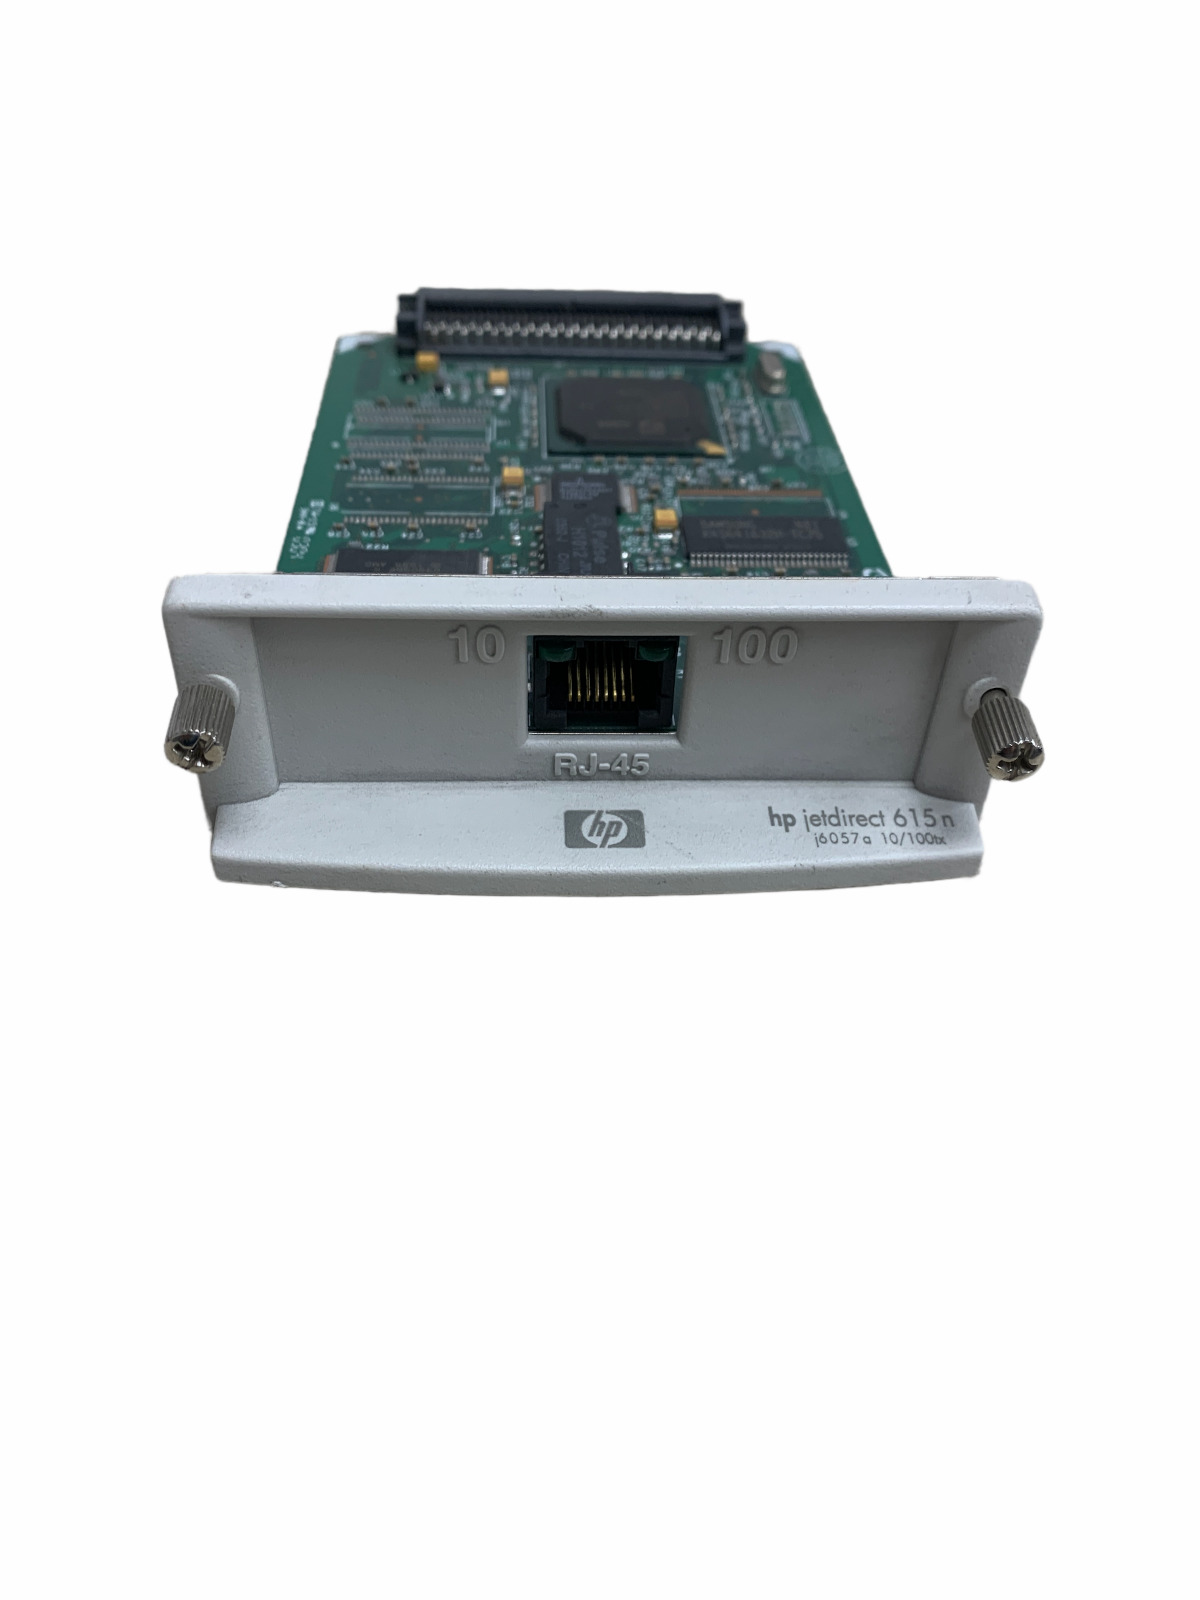 HP JetDirect 615n EIO 10/100TX Ethernet Print Server J6057A